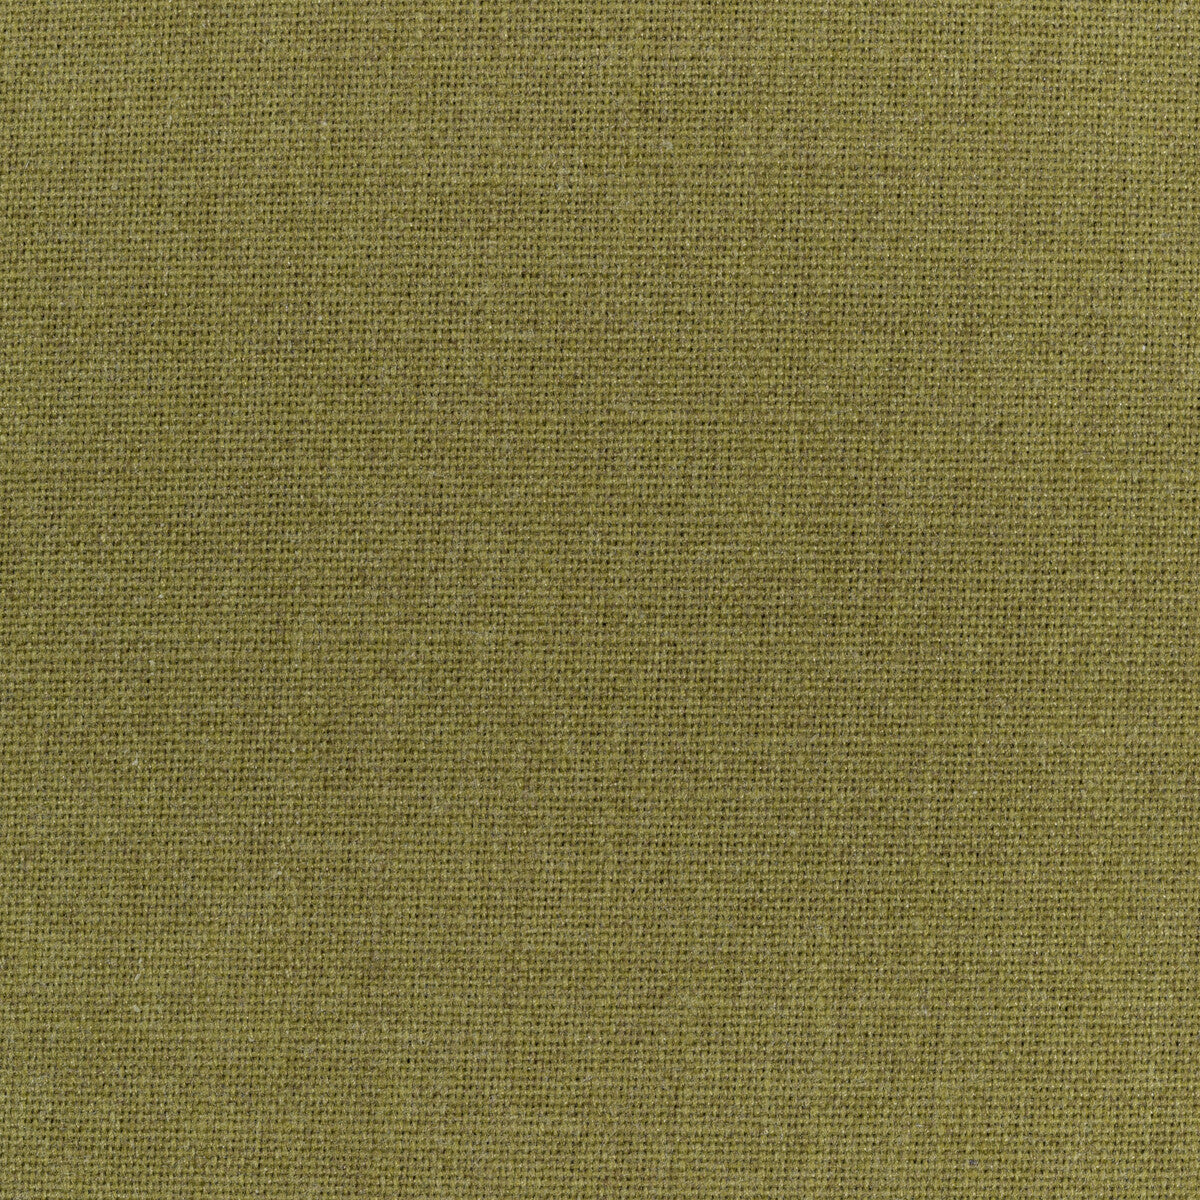 Kravet Smart fabric in 36112-34 color - pattern 36112.34.0 - by Kravet Smart in the Performance Kravetarmor collection